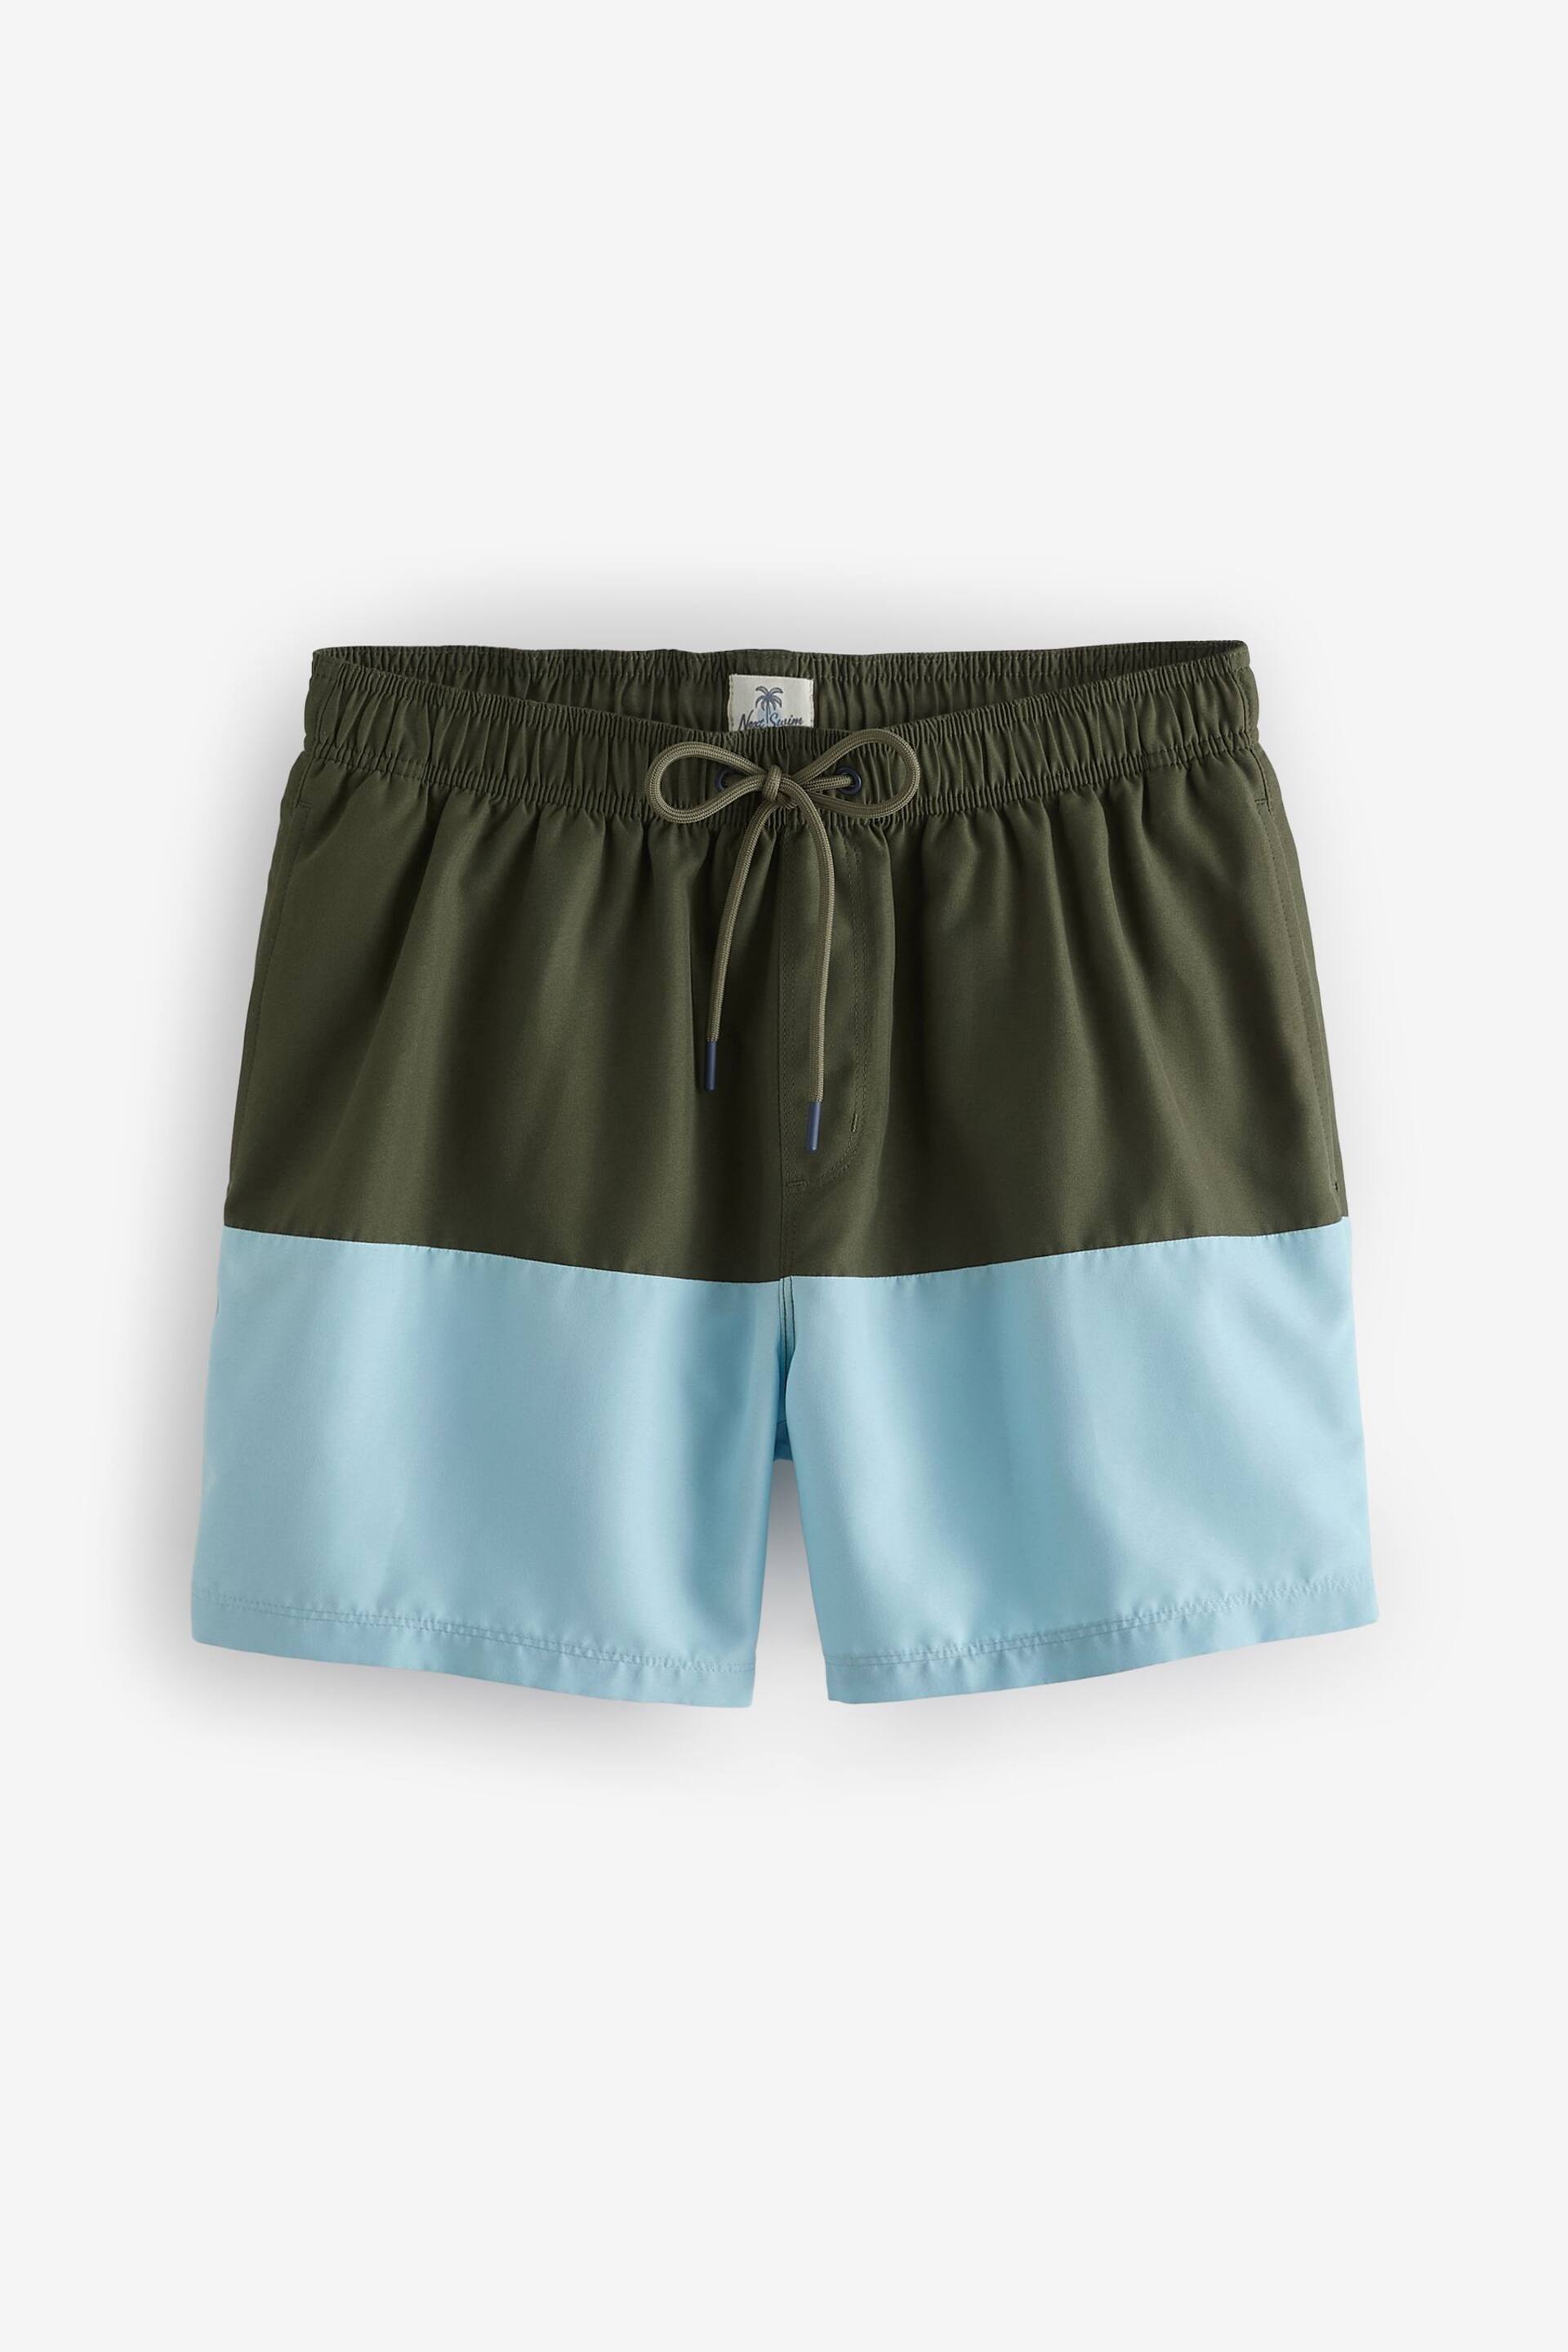 Green/Blue 50/50 Swim Shorts - Image 7 of 12